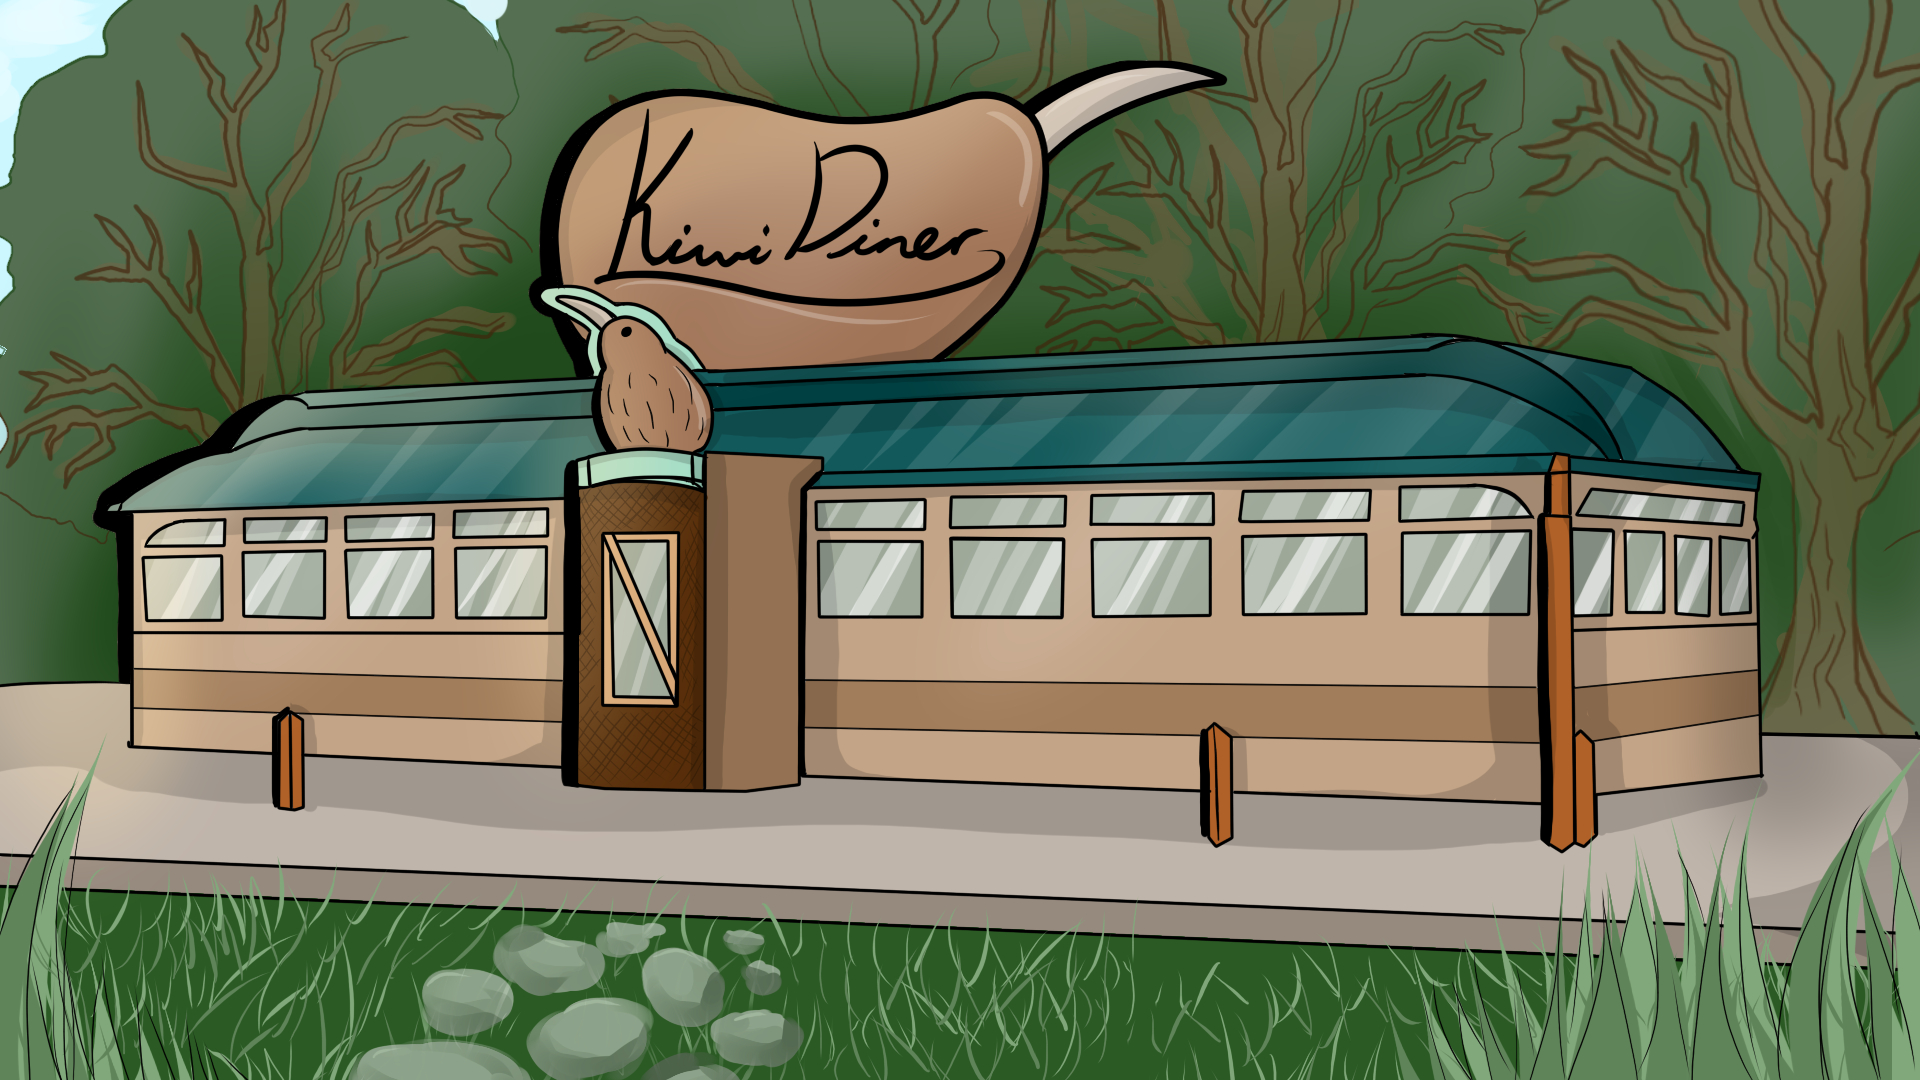 Illustration of Kiwi Diner exterior